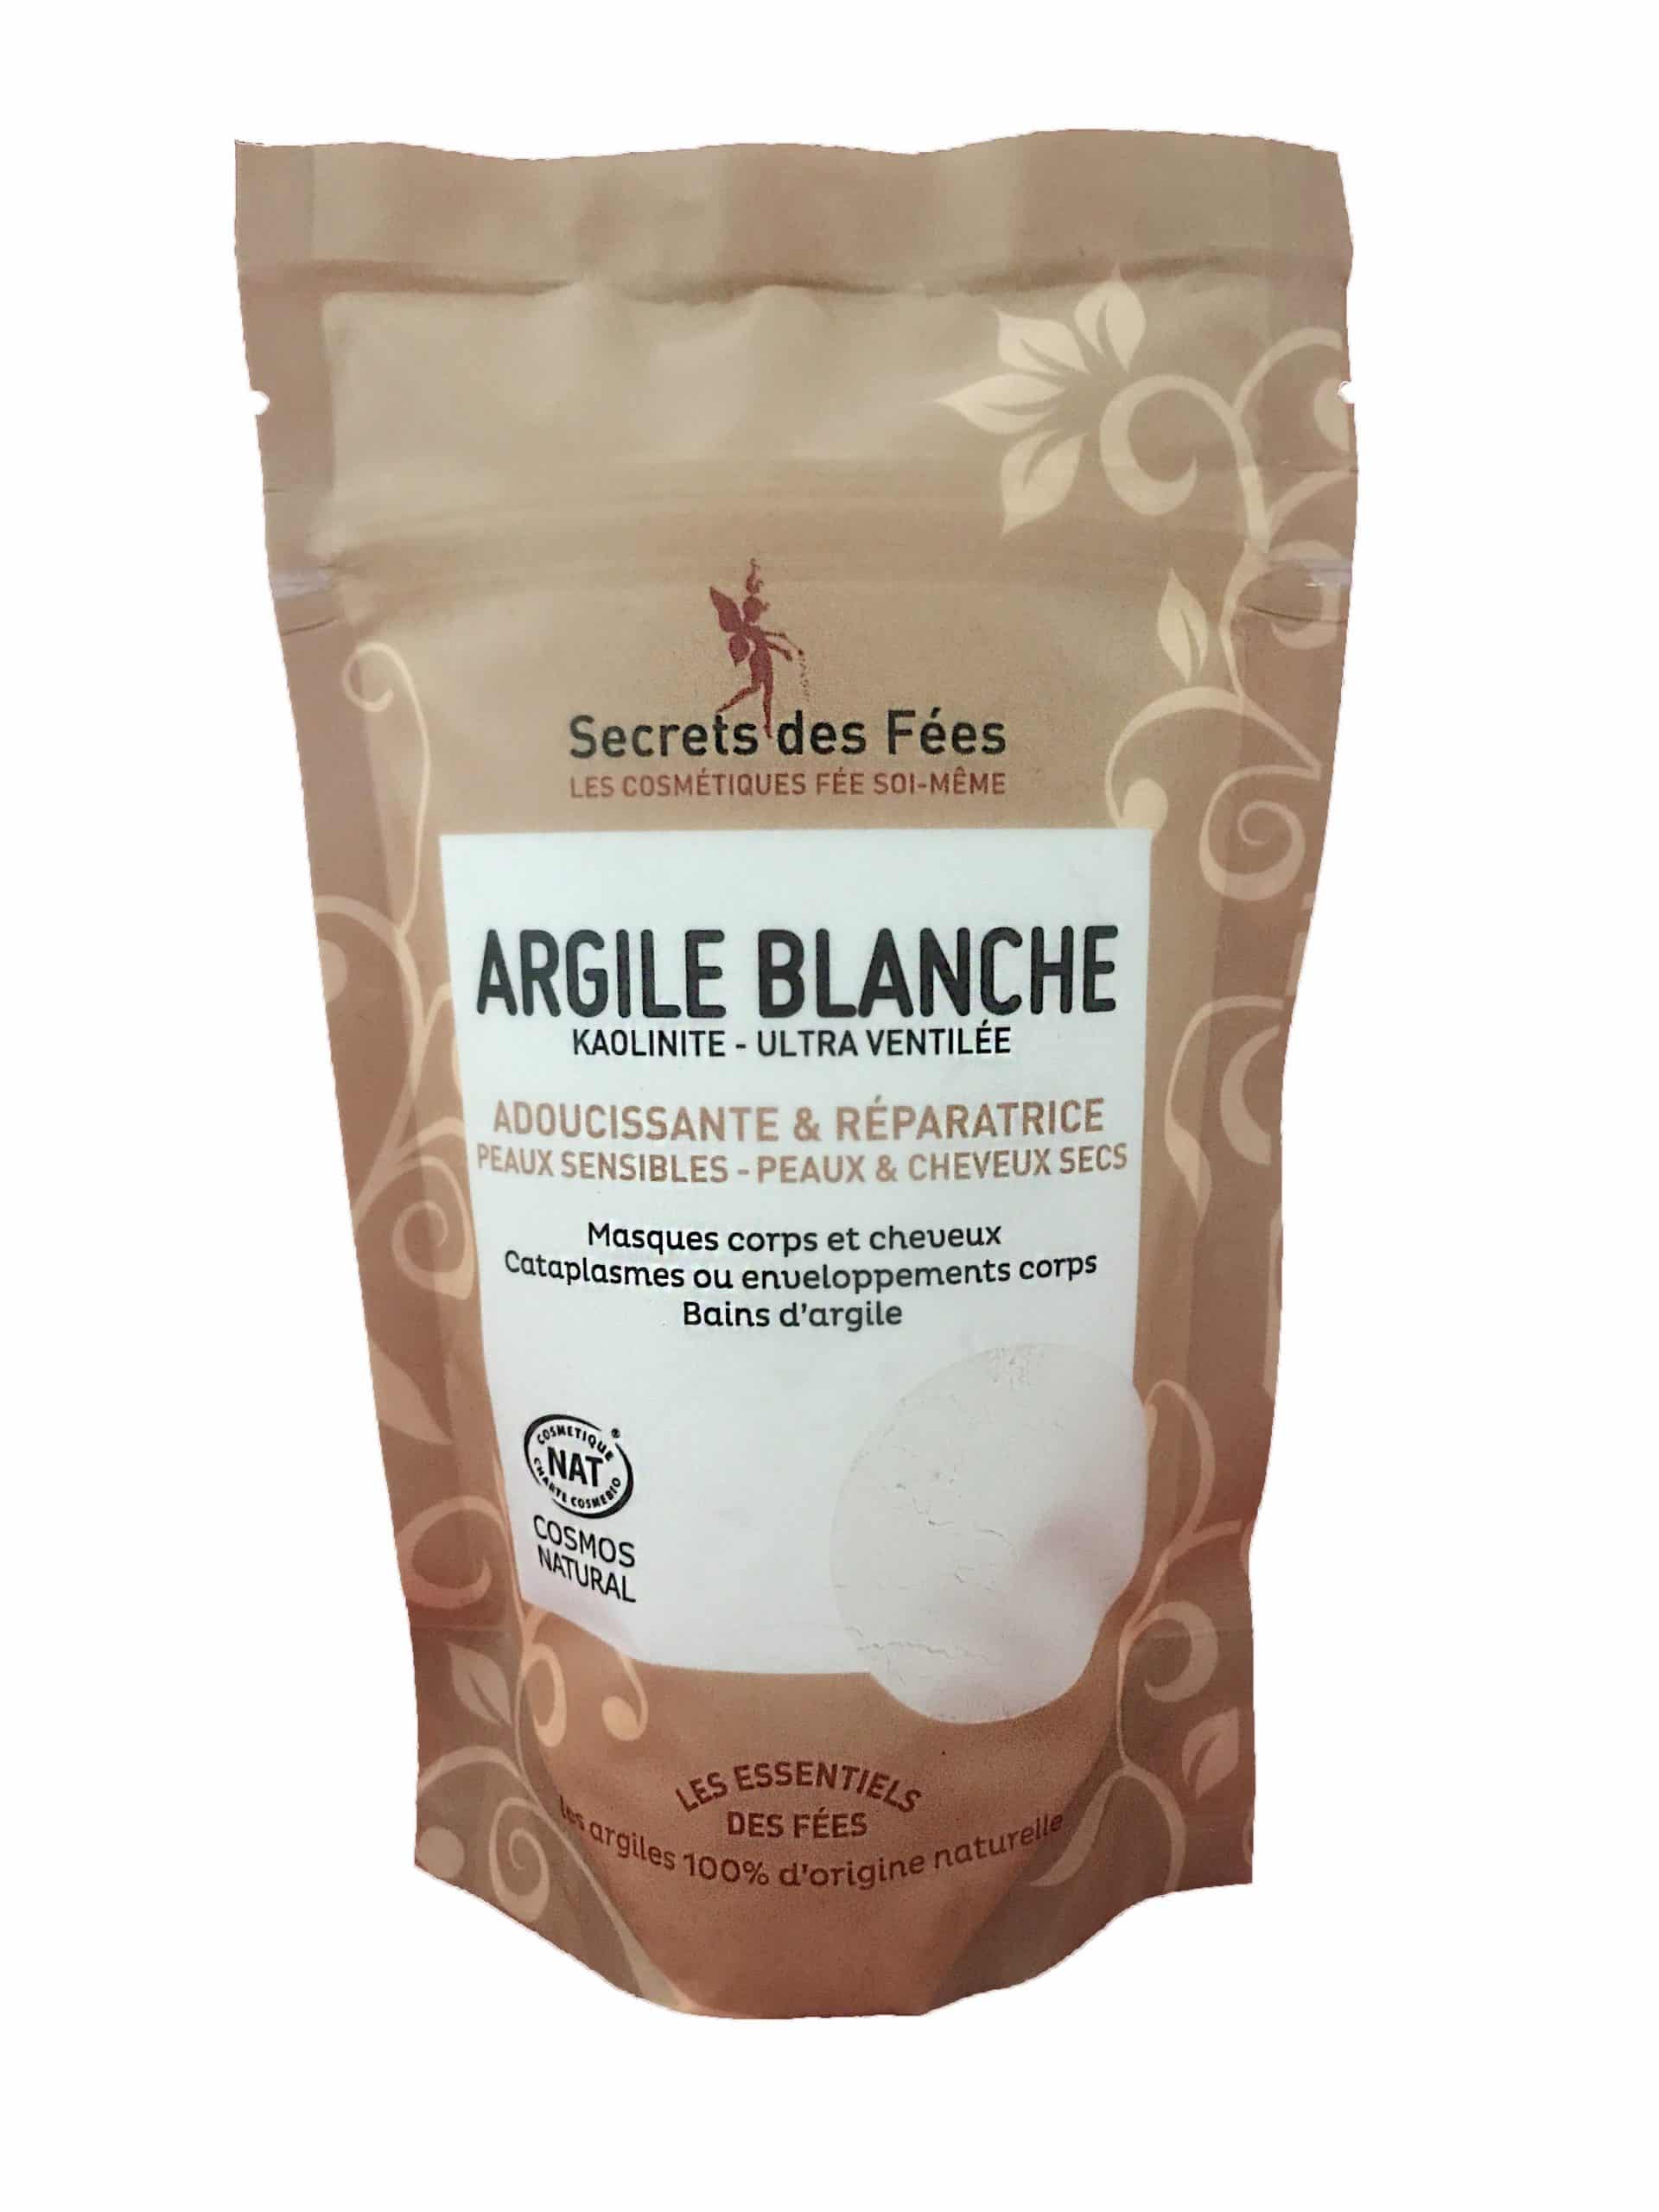 Argile blanche (Kaolin)